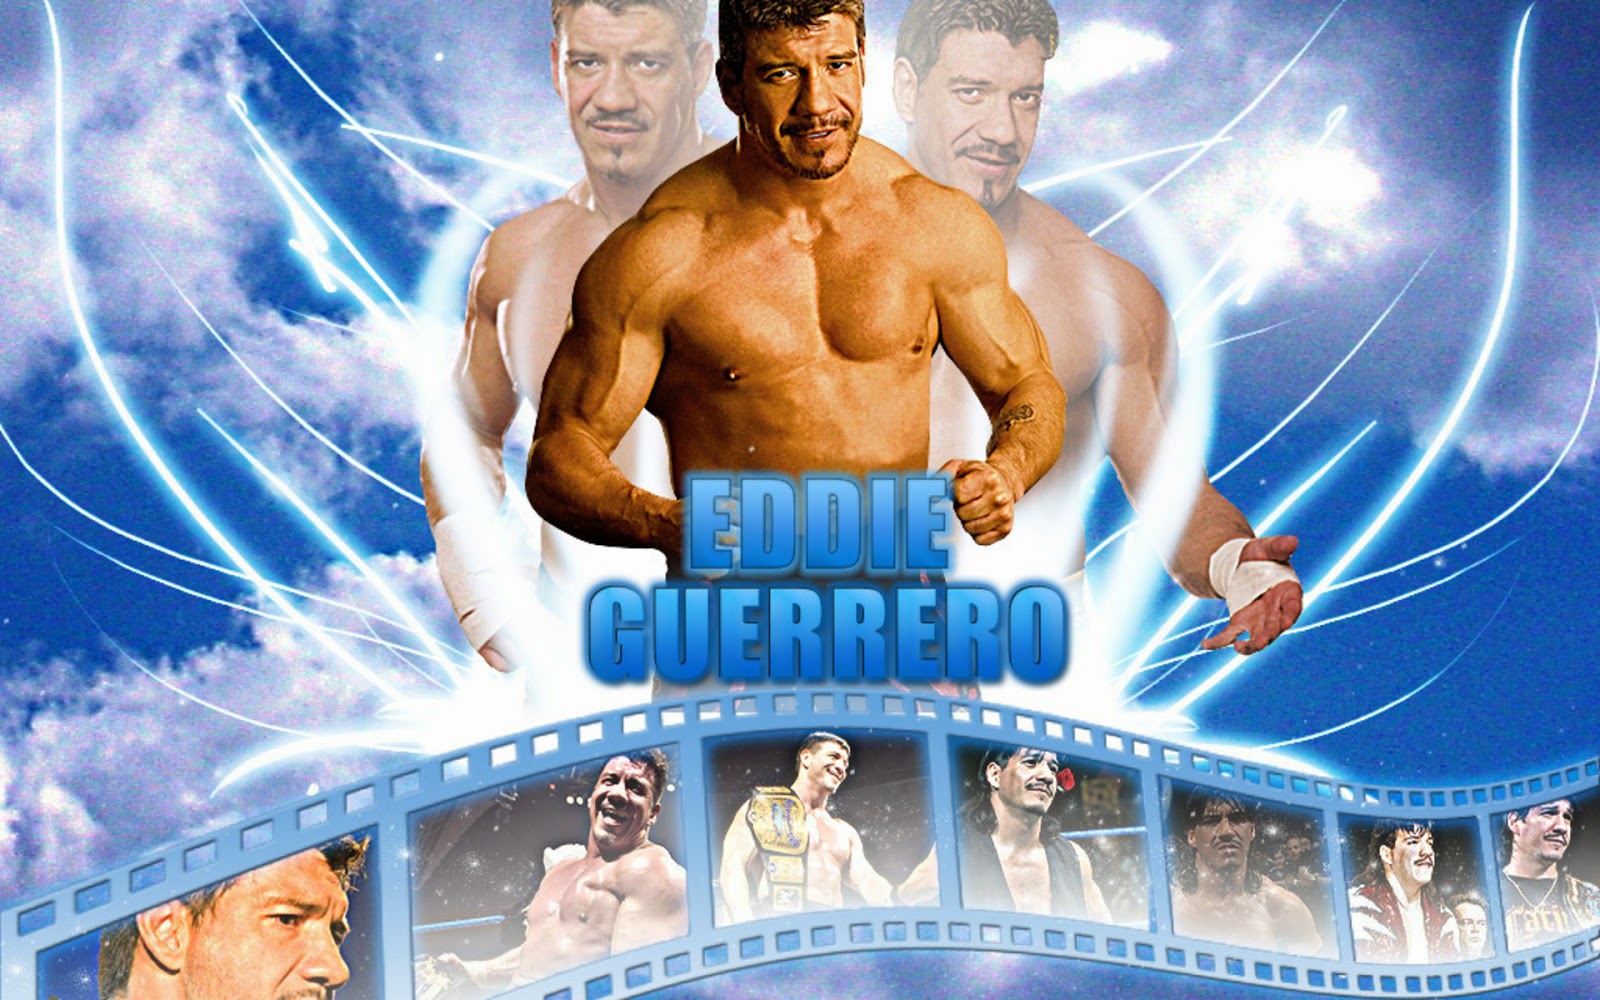 eddie guerrero wallpaper,professional wrestling,wrestler,barechested,poster,movie